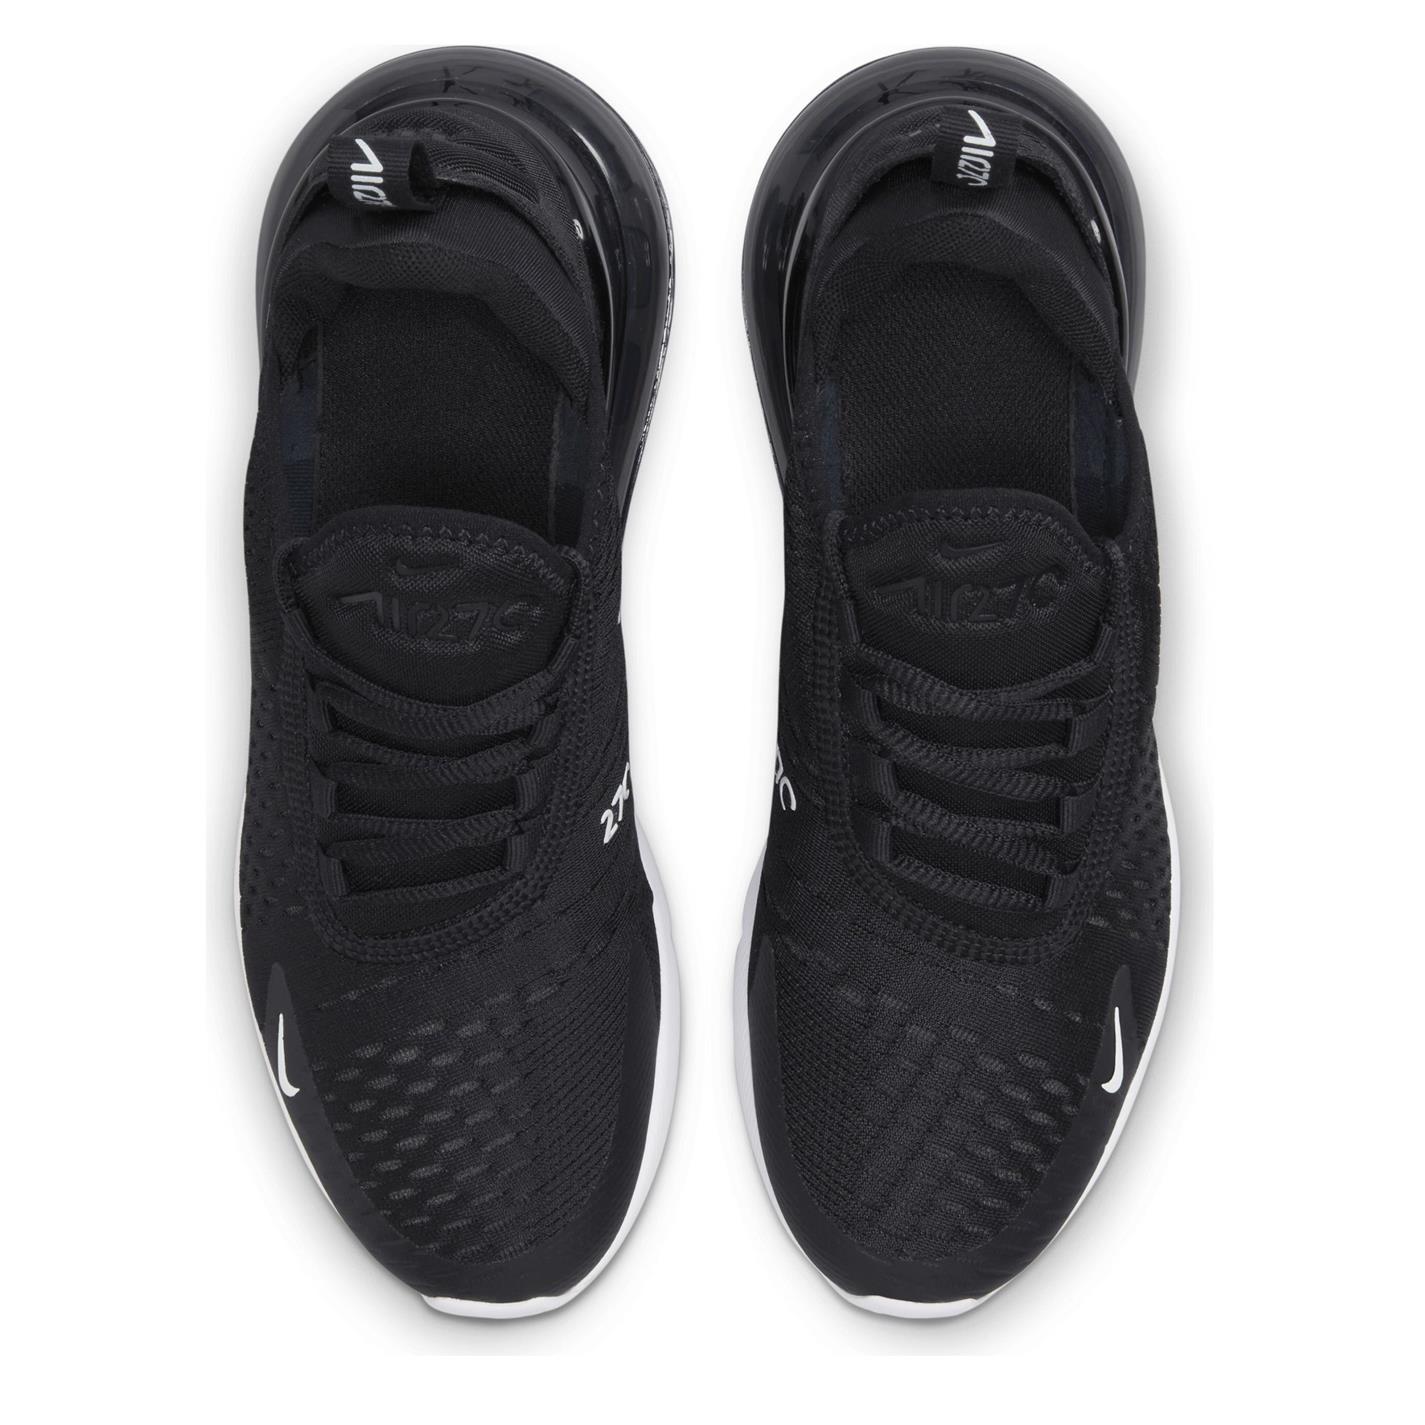 Adidasi sport Nike Air Max 270 React pentru copii negru alb